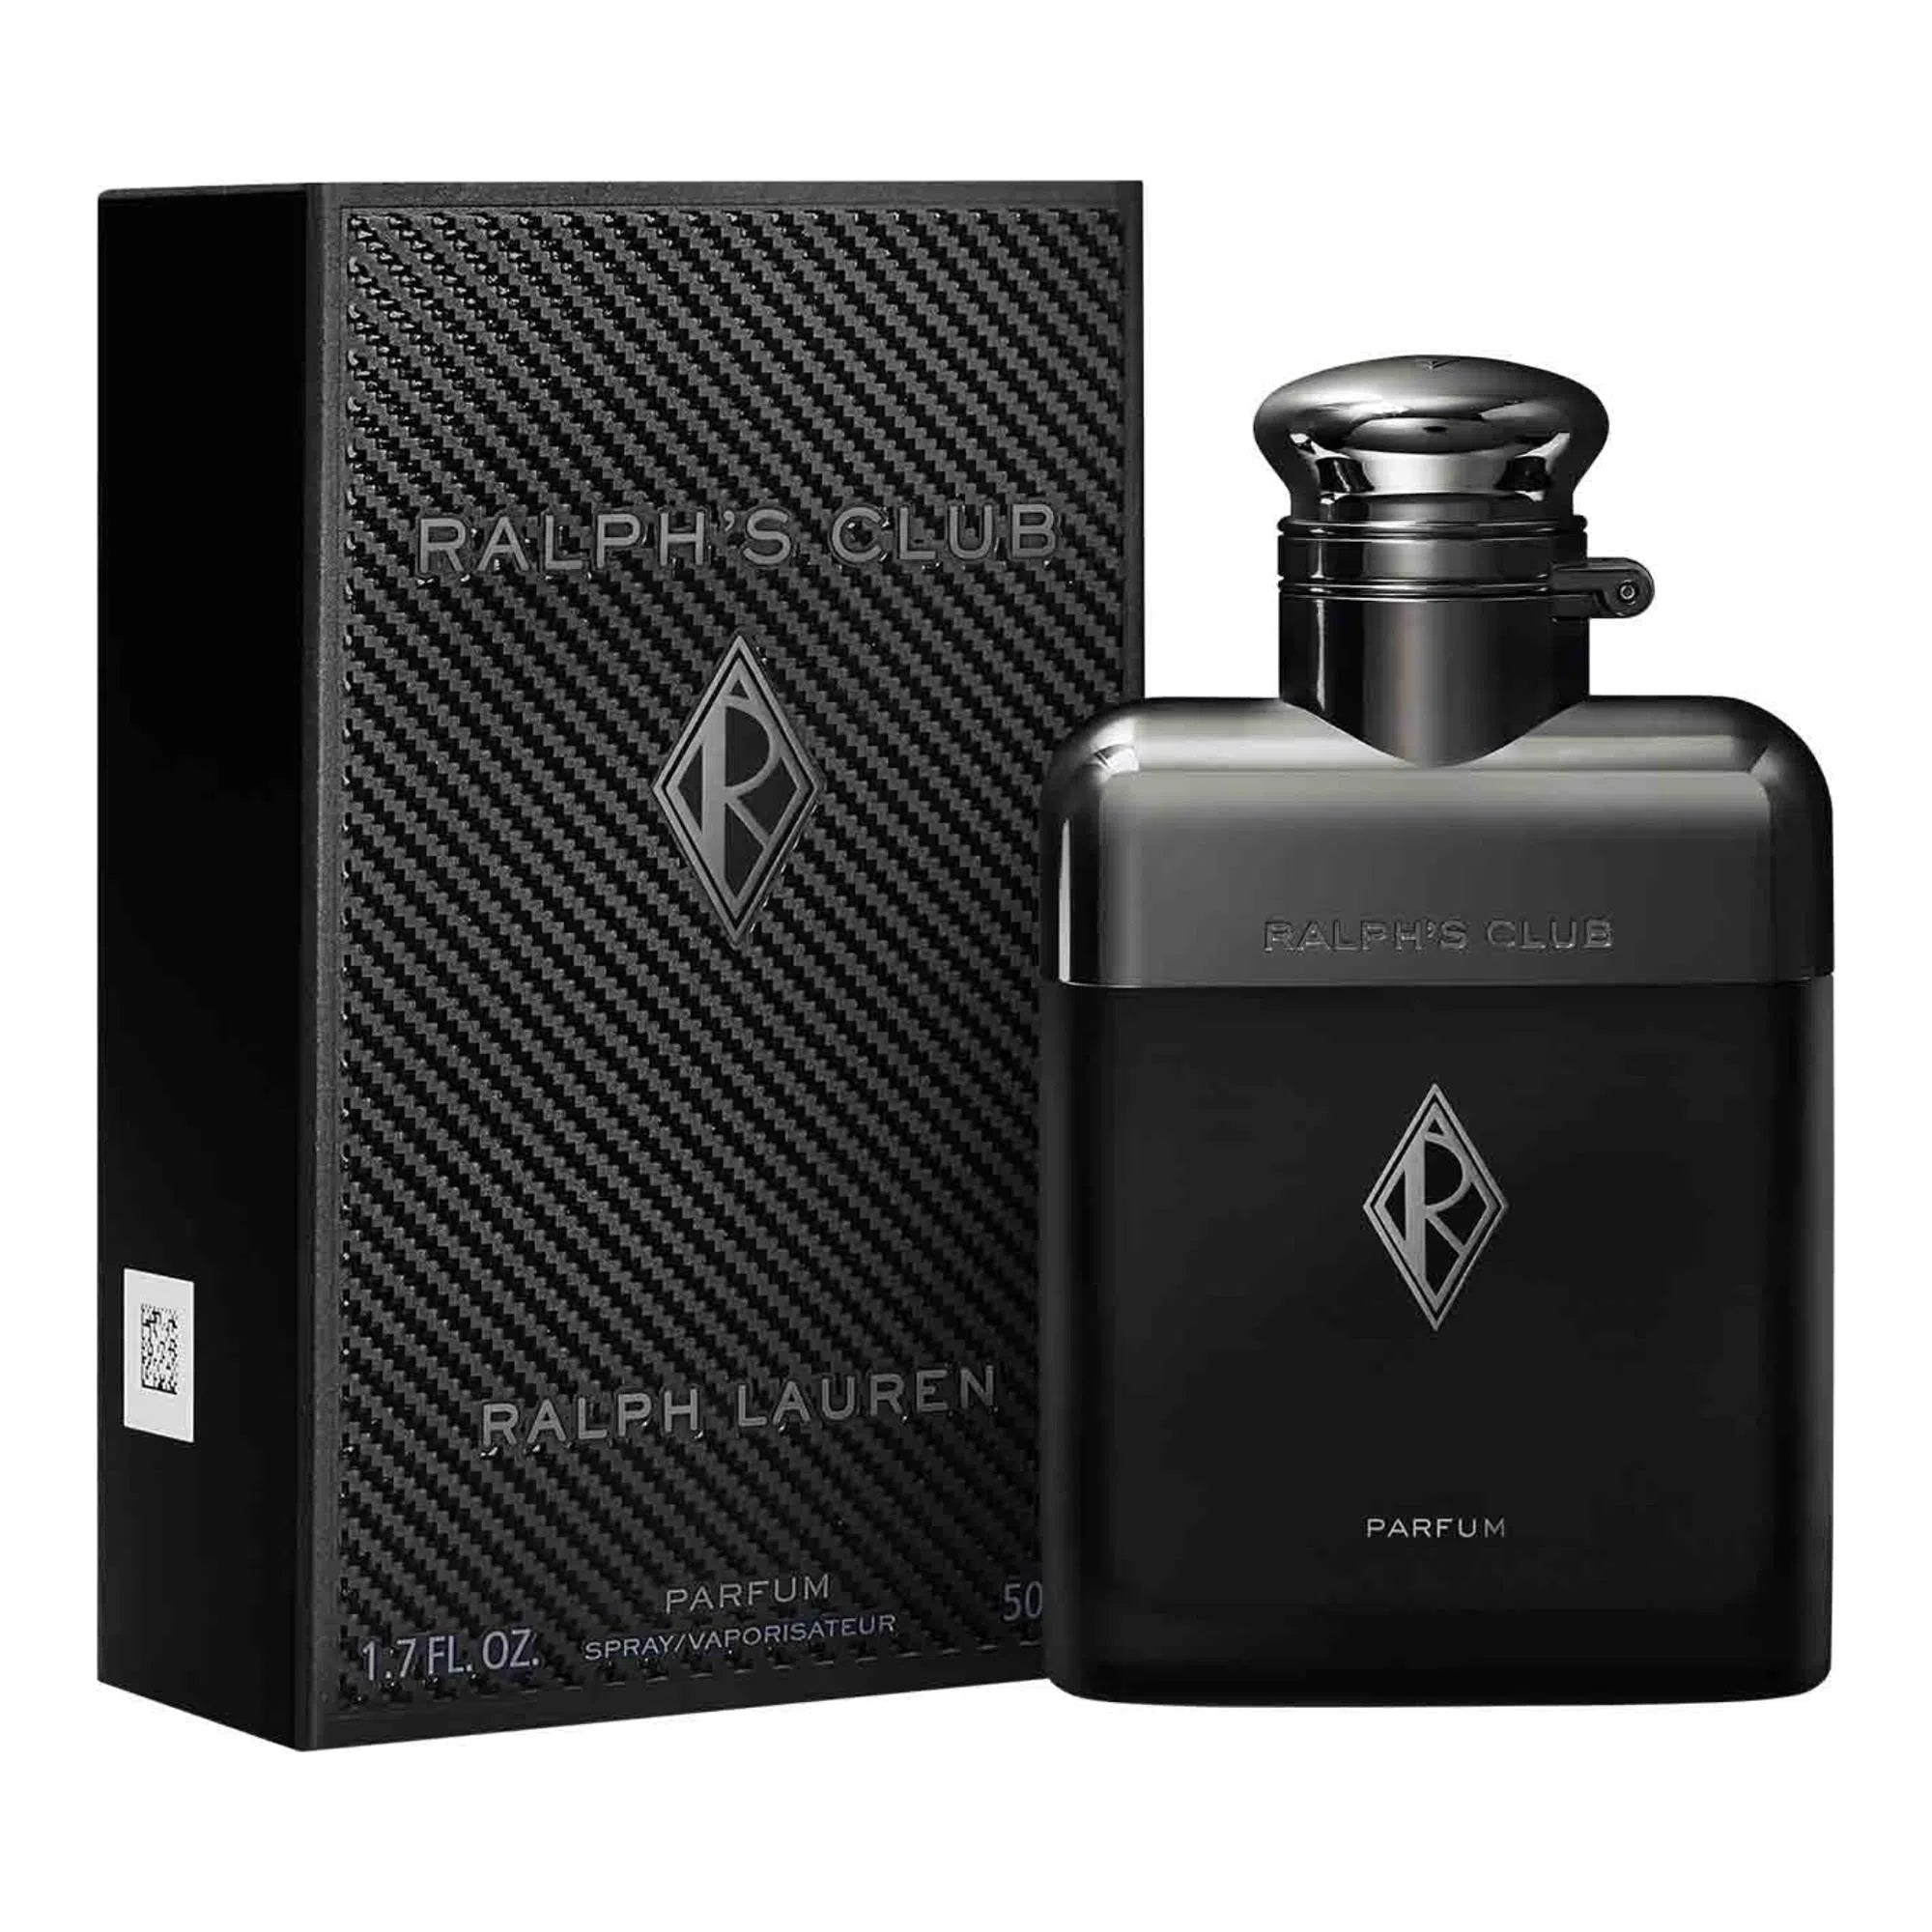 Perfume Ralph Lauren Ralph's Club Parfum (M) / 50 ml - 3605972698780- Prive Perfumes Honduras